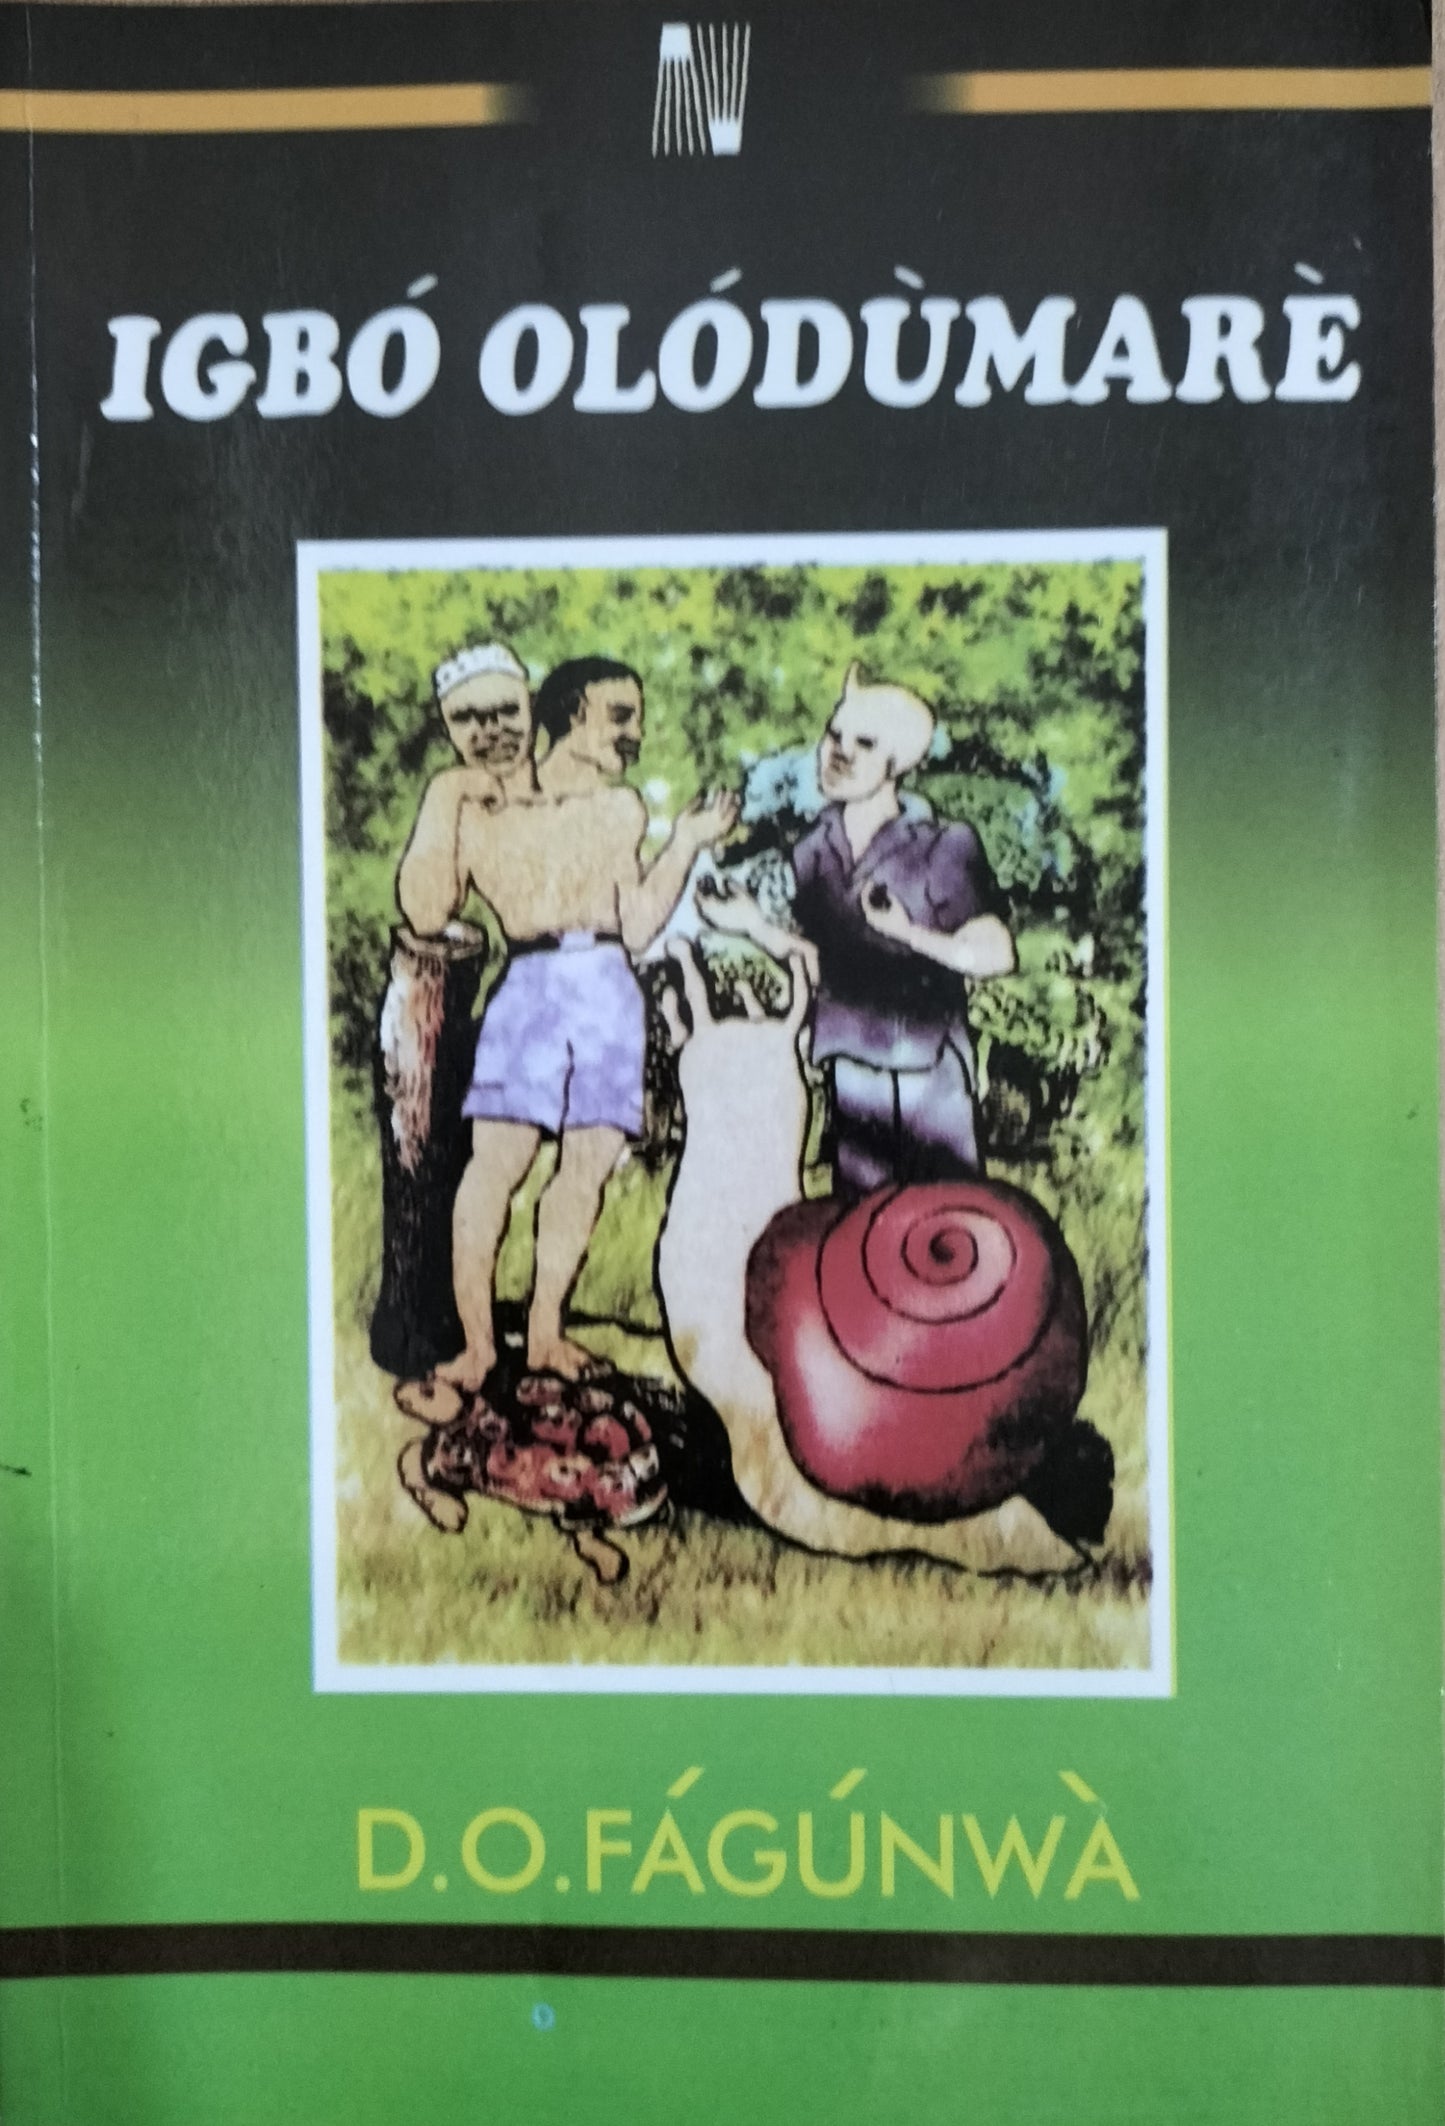 Igbo Olodumare by D. O. Fagunwa